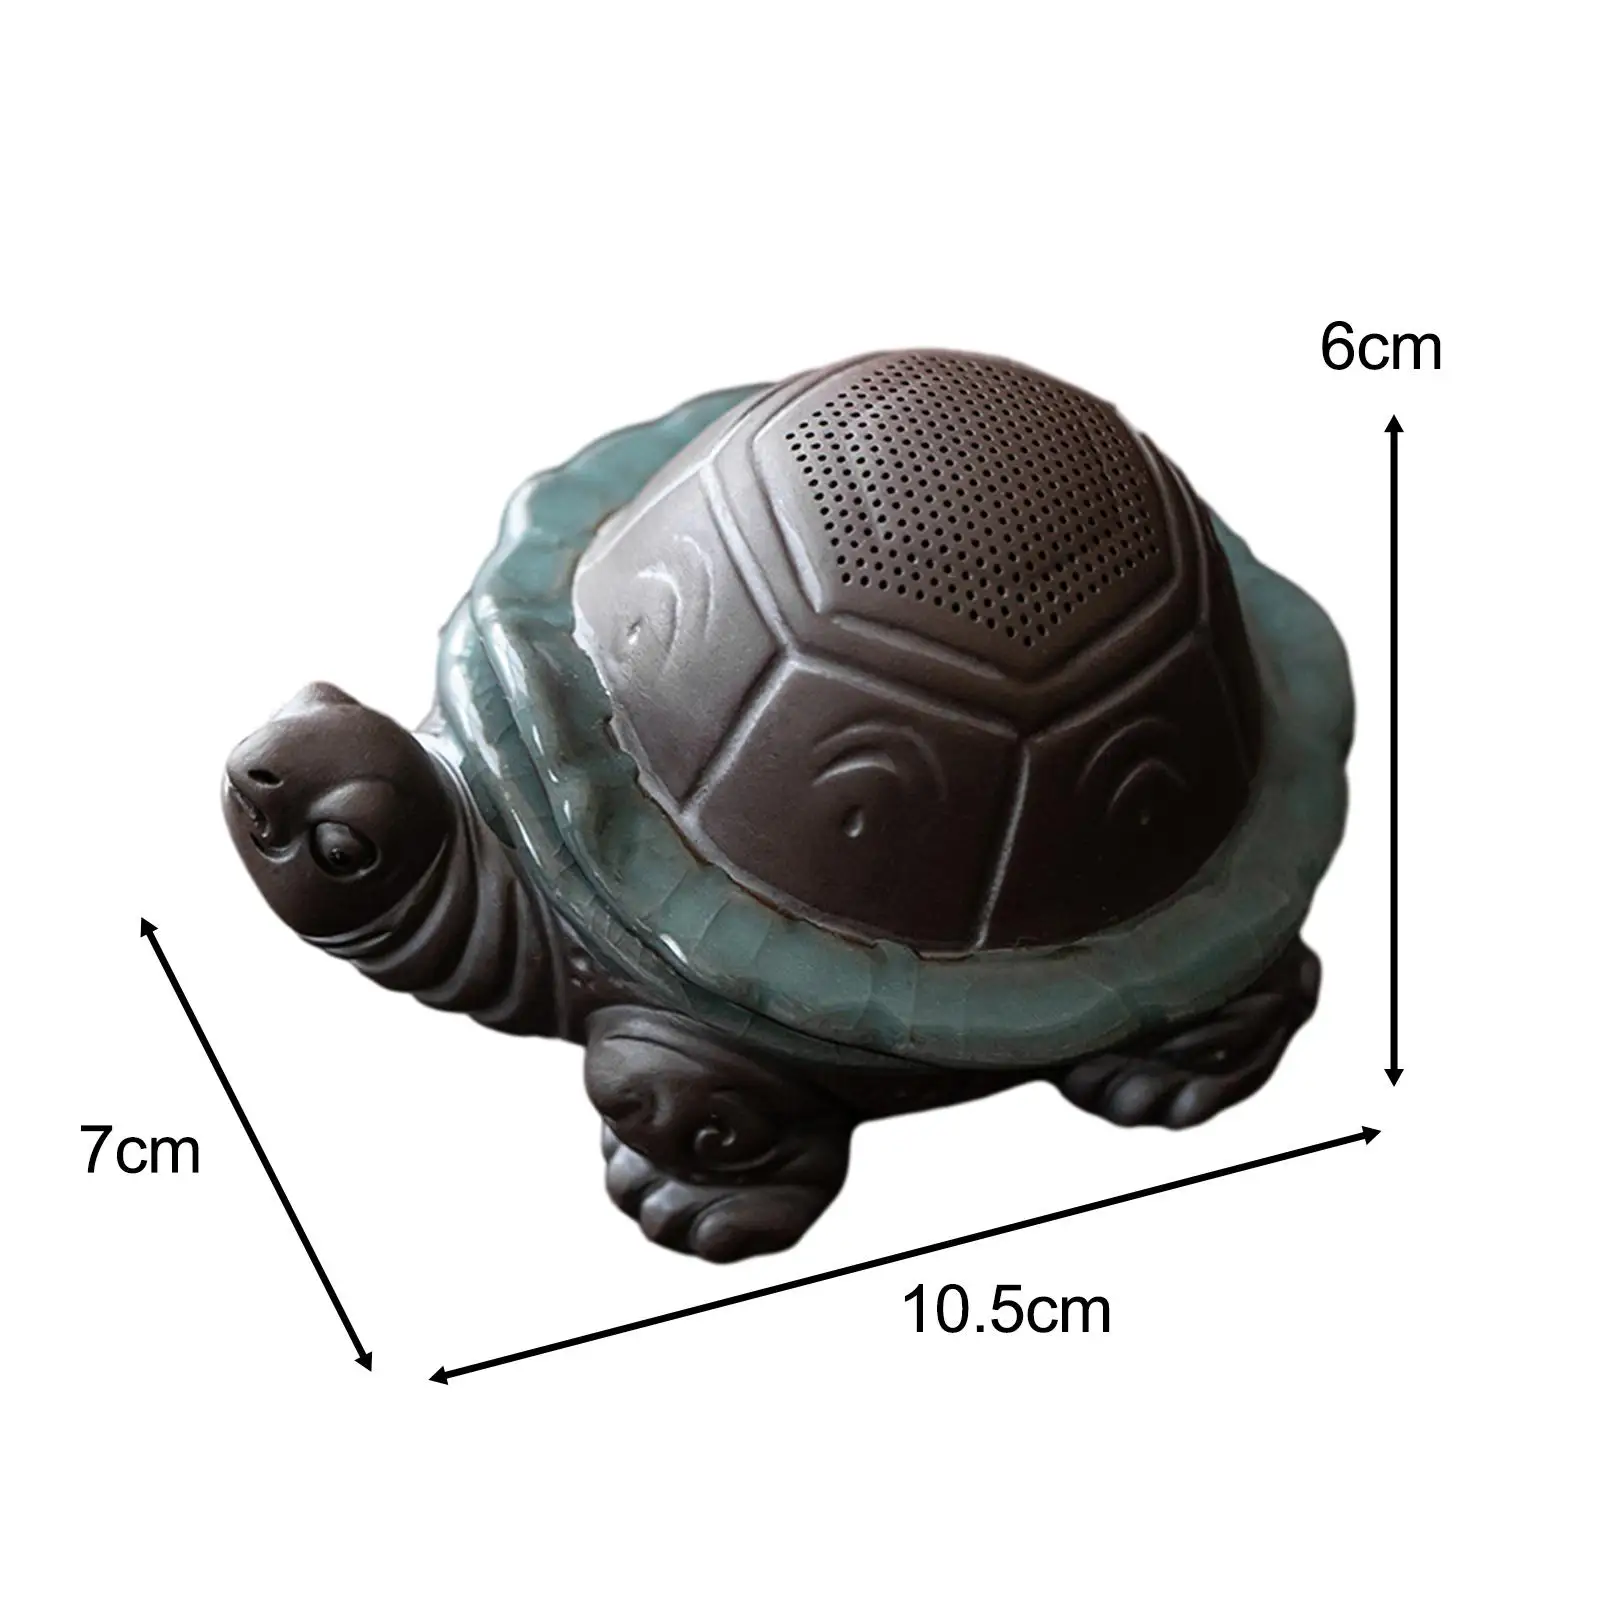 Tea Pet with Tea Filter Clay Miniature Home Desk Living Room Turtle Figurine